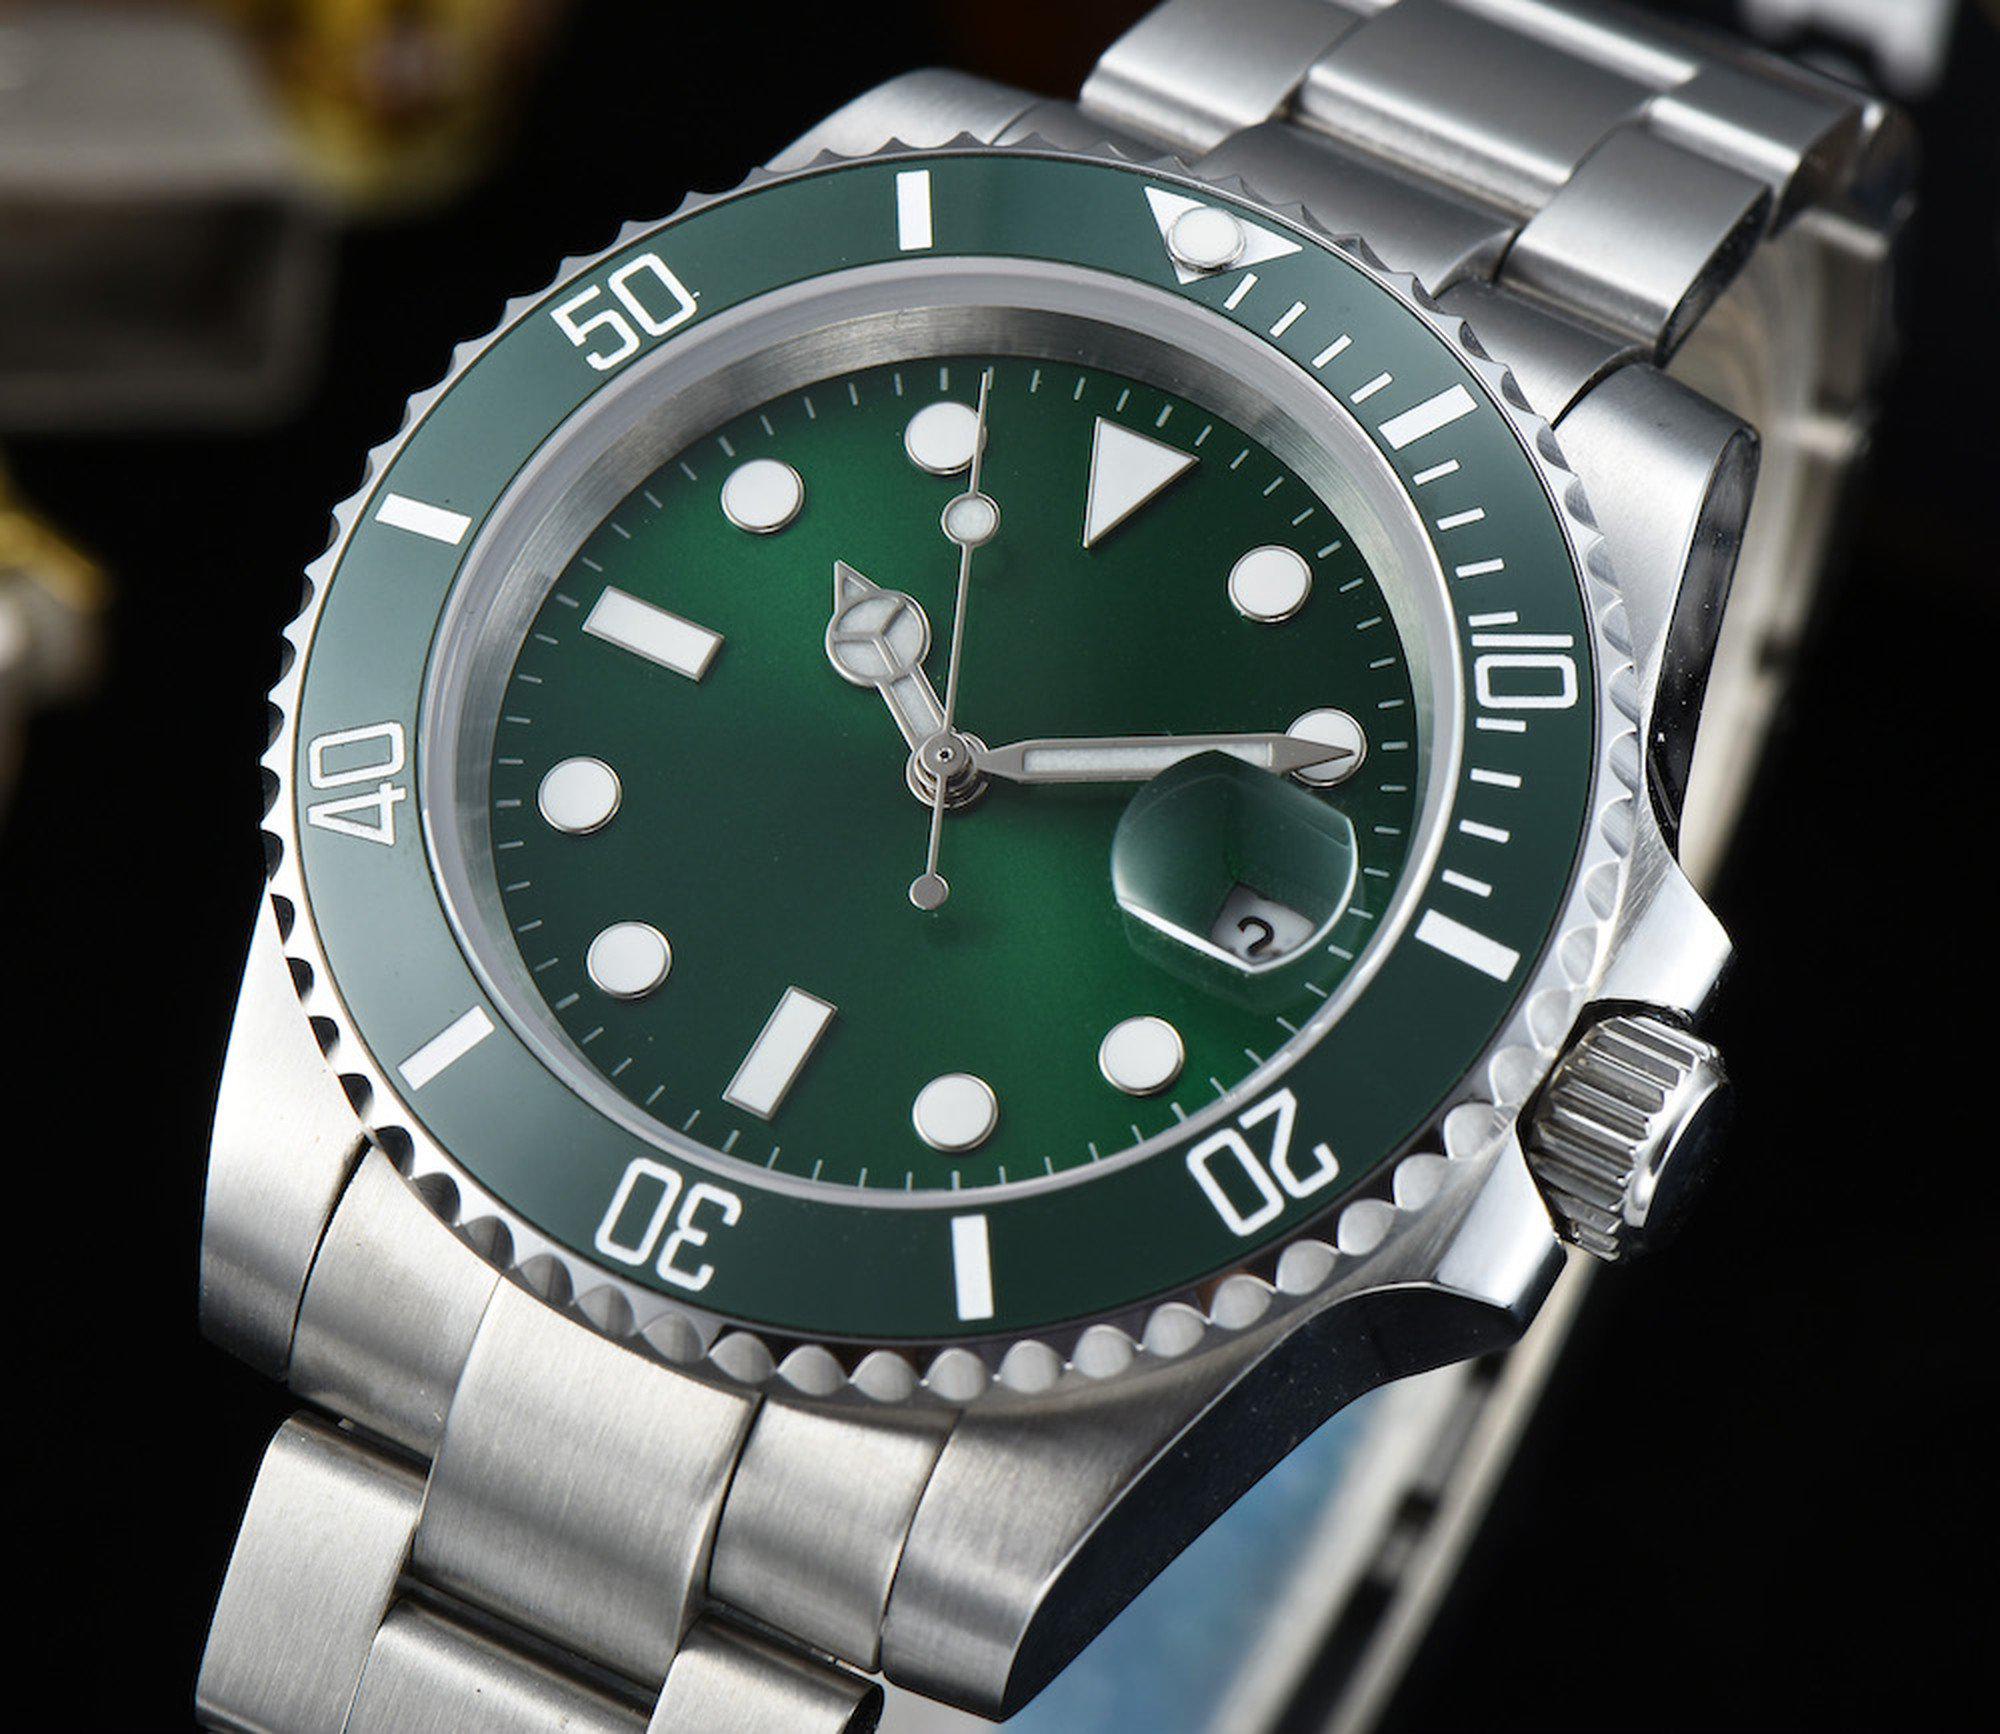 Men's self-winding watch / high quality movement Submariner 40mm green / suit, popular luxury brand / waterproof / fashion